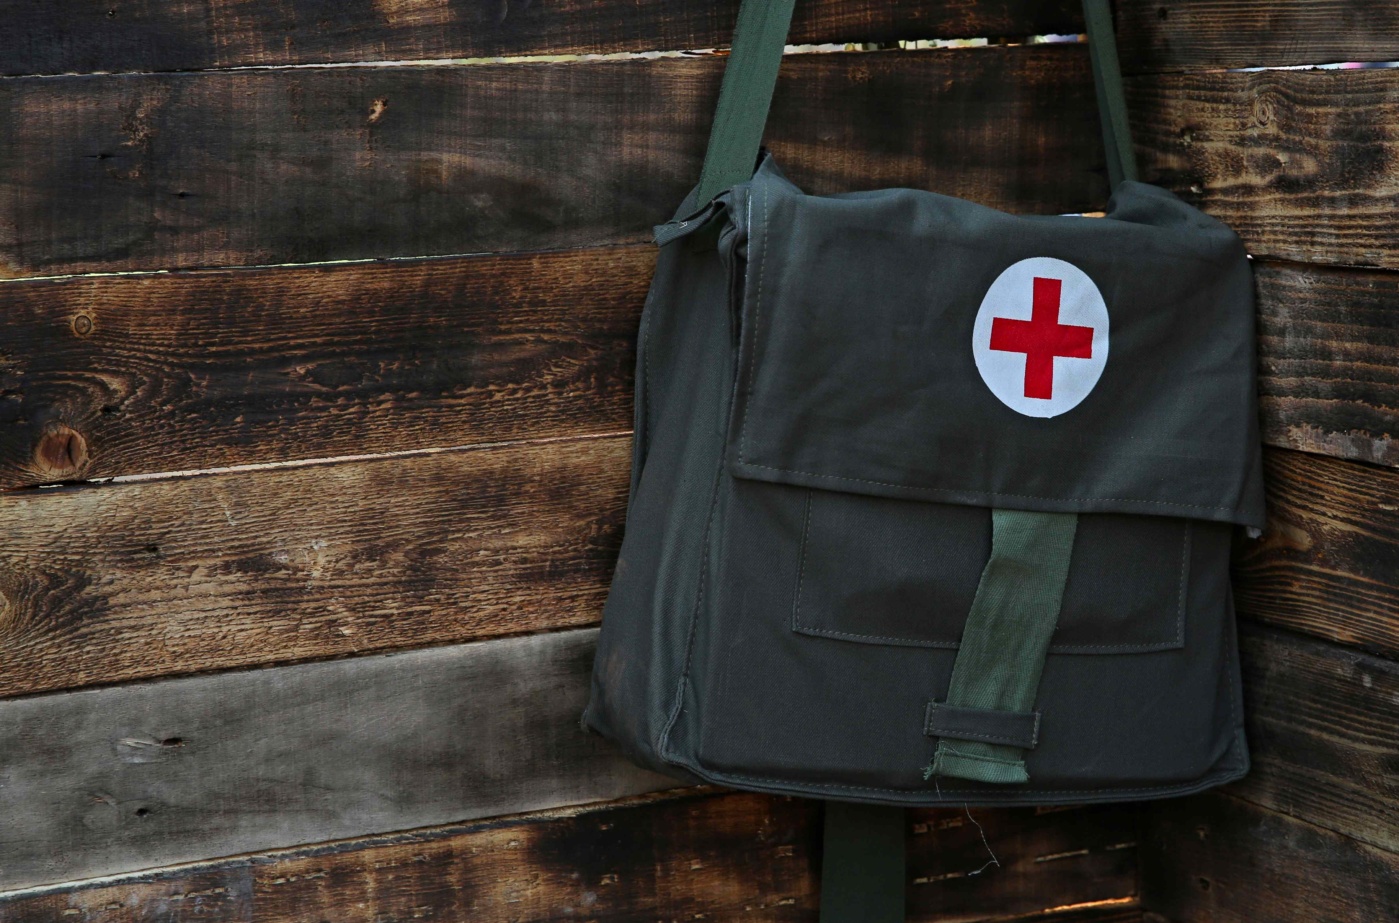 Red Cross humanitarian aid